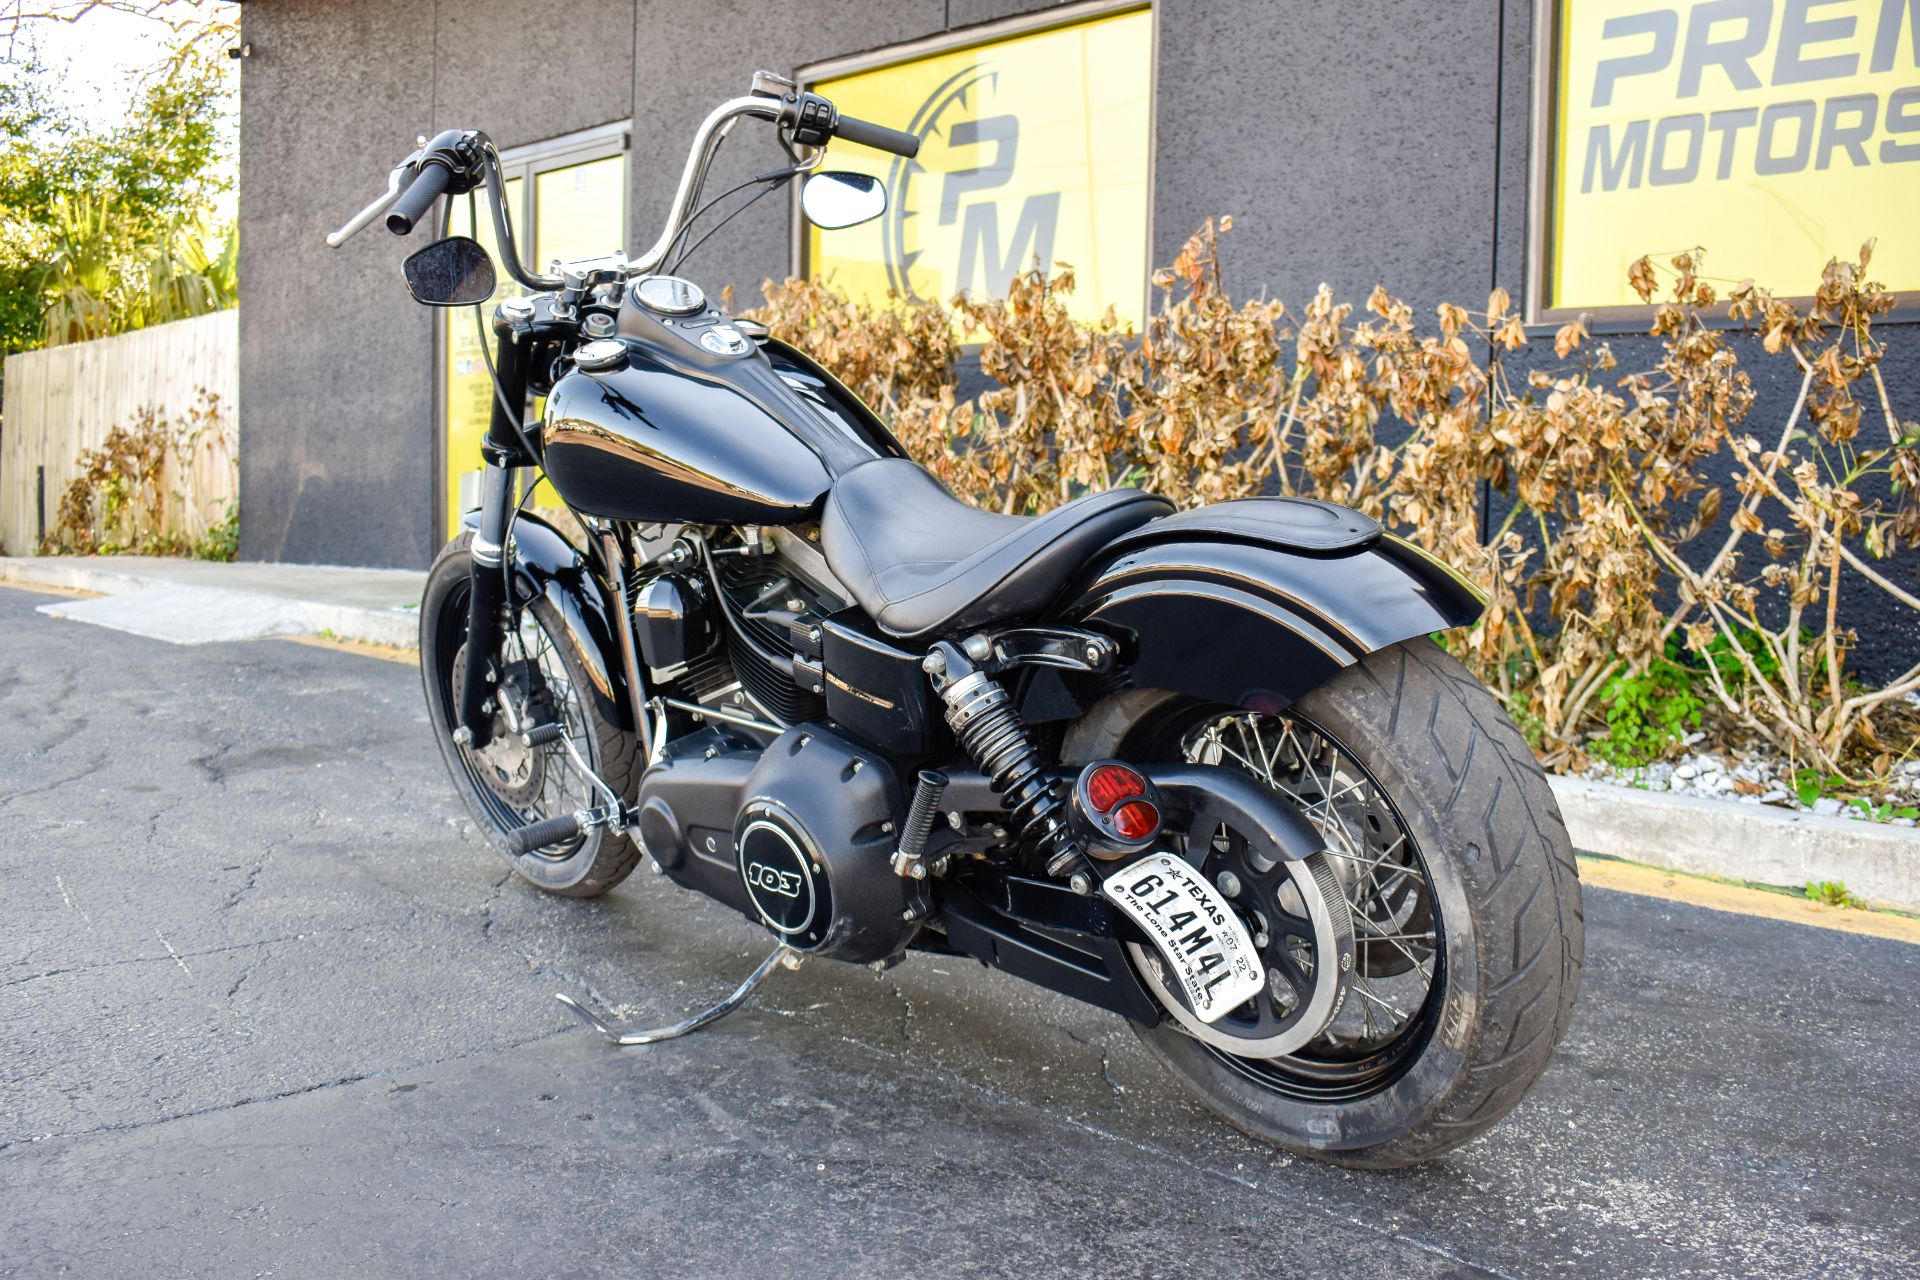 2014 Harley-Davidson Dyna® Street Bob® in Jacksonville, Florida - Photo 16